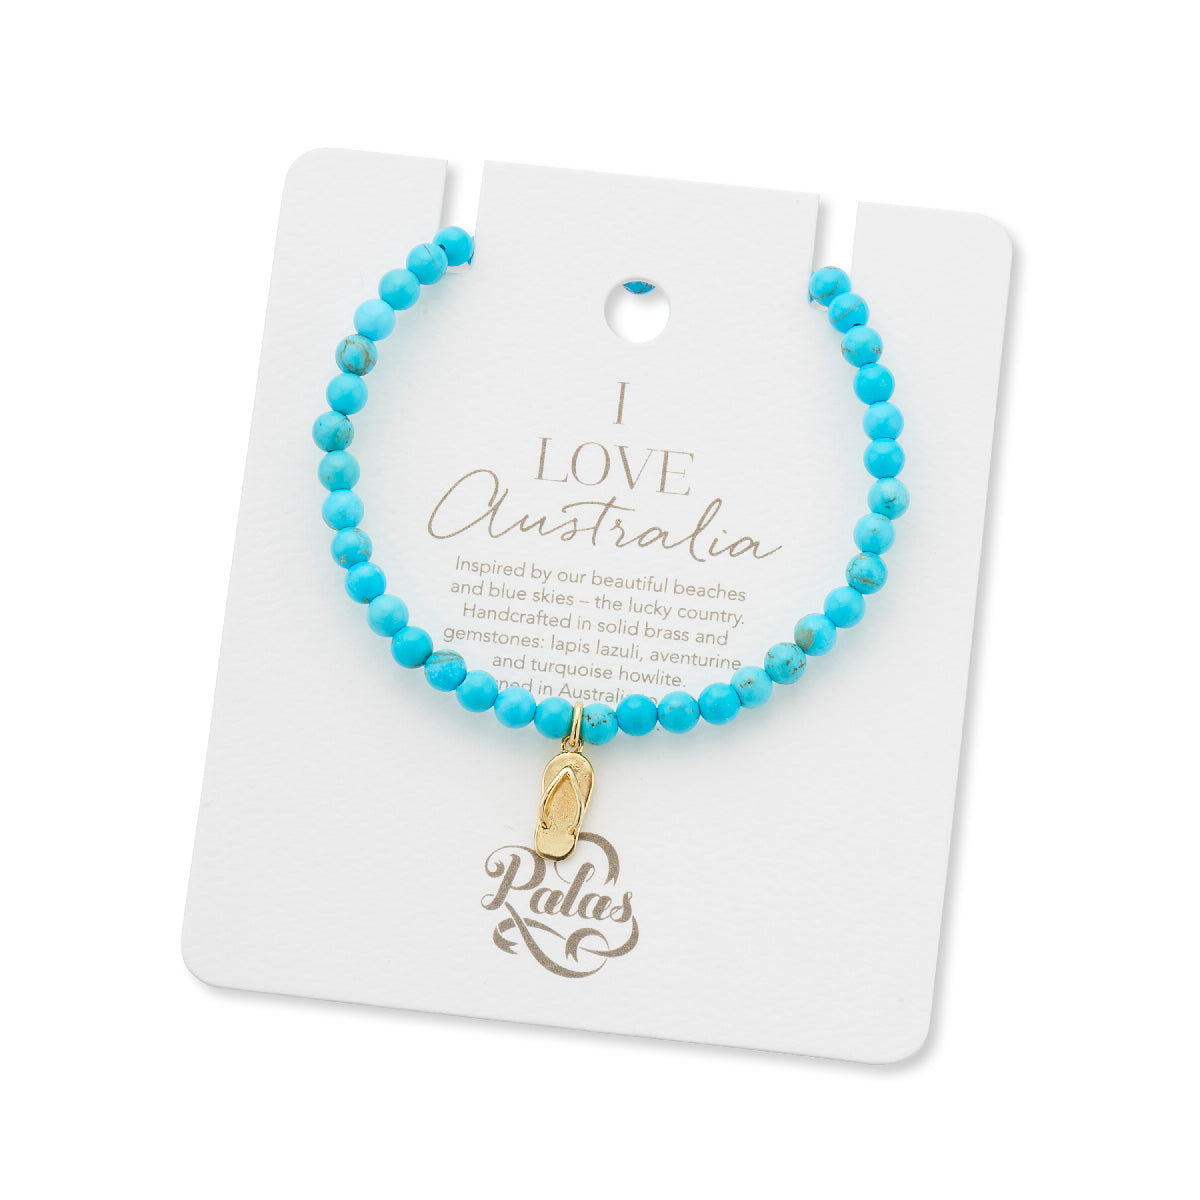 Thong charm turquoise howlite bracelet